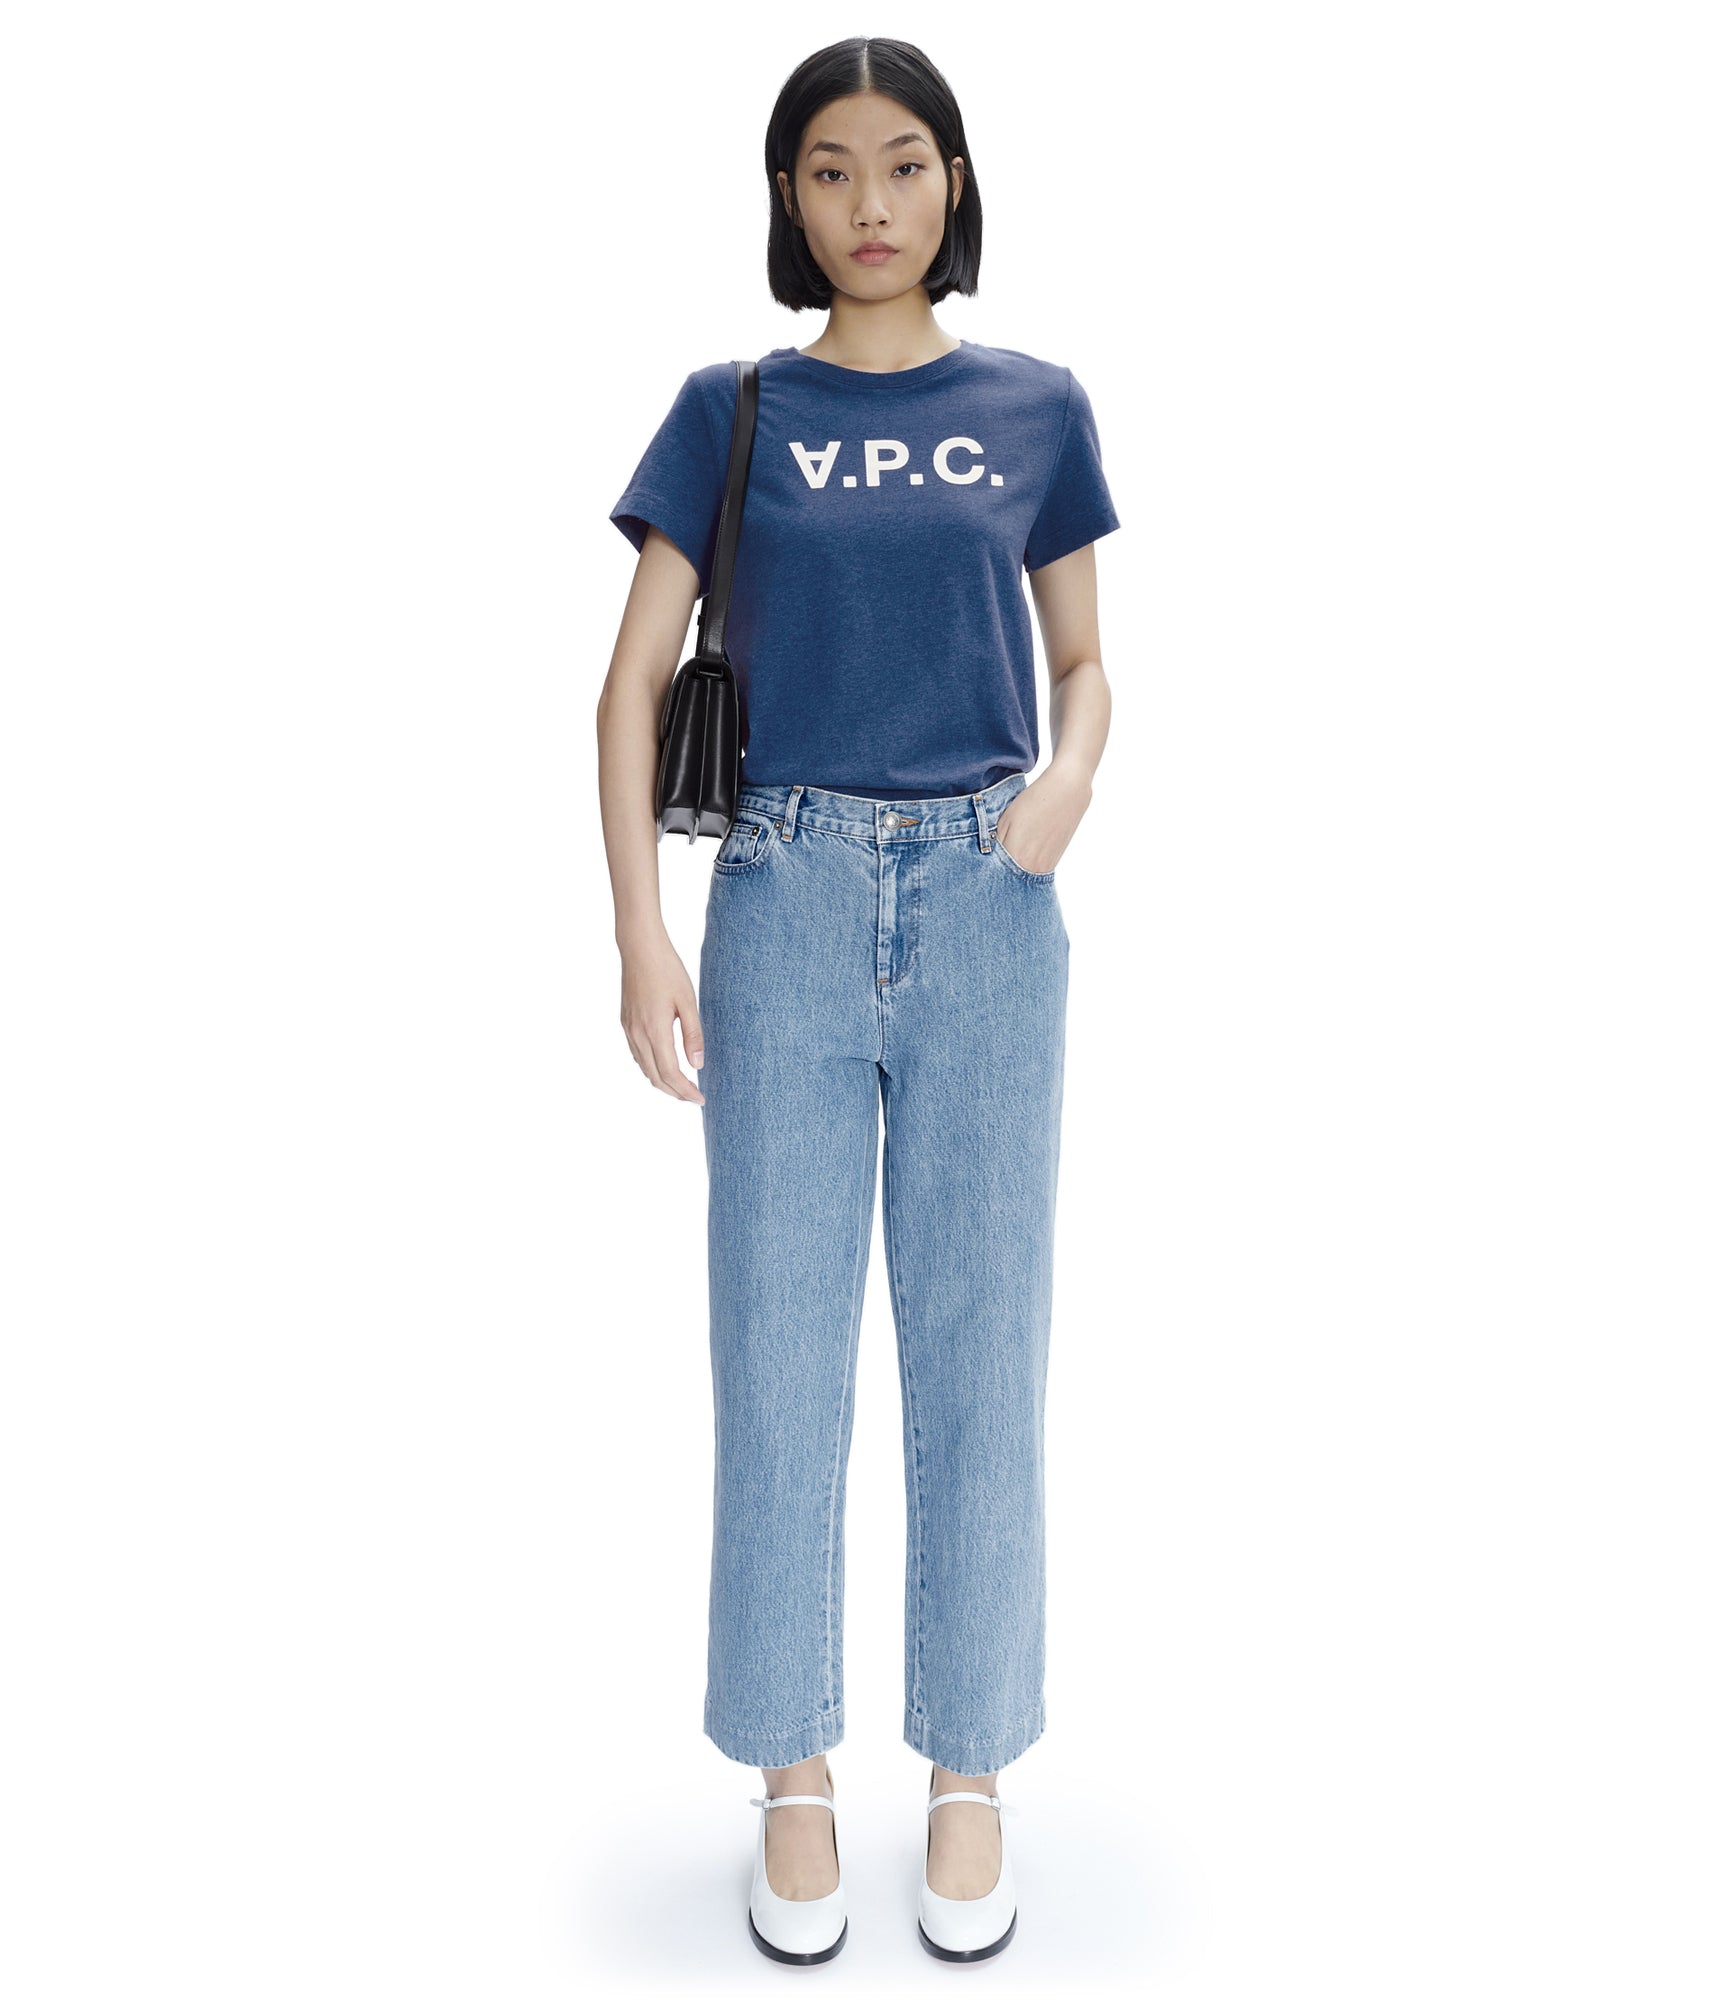 VPC t-shirt, dark blue